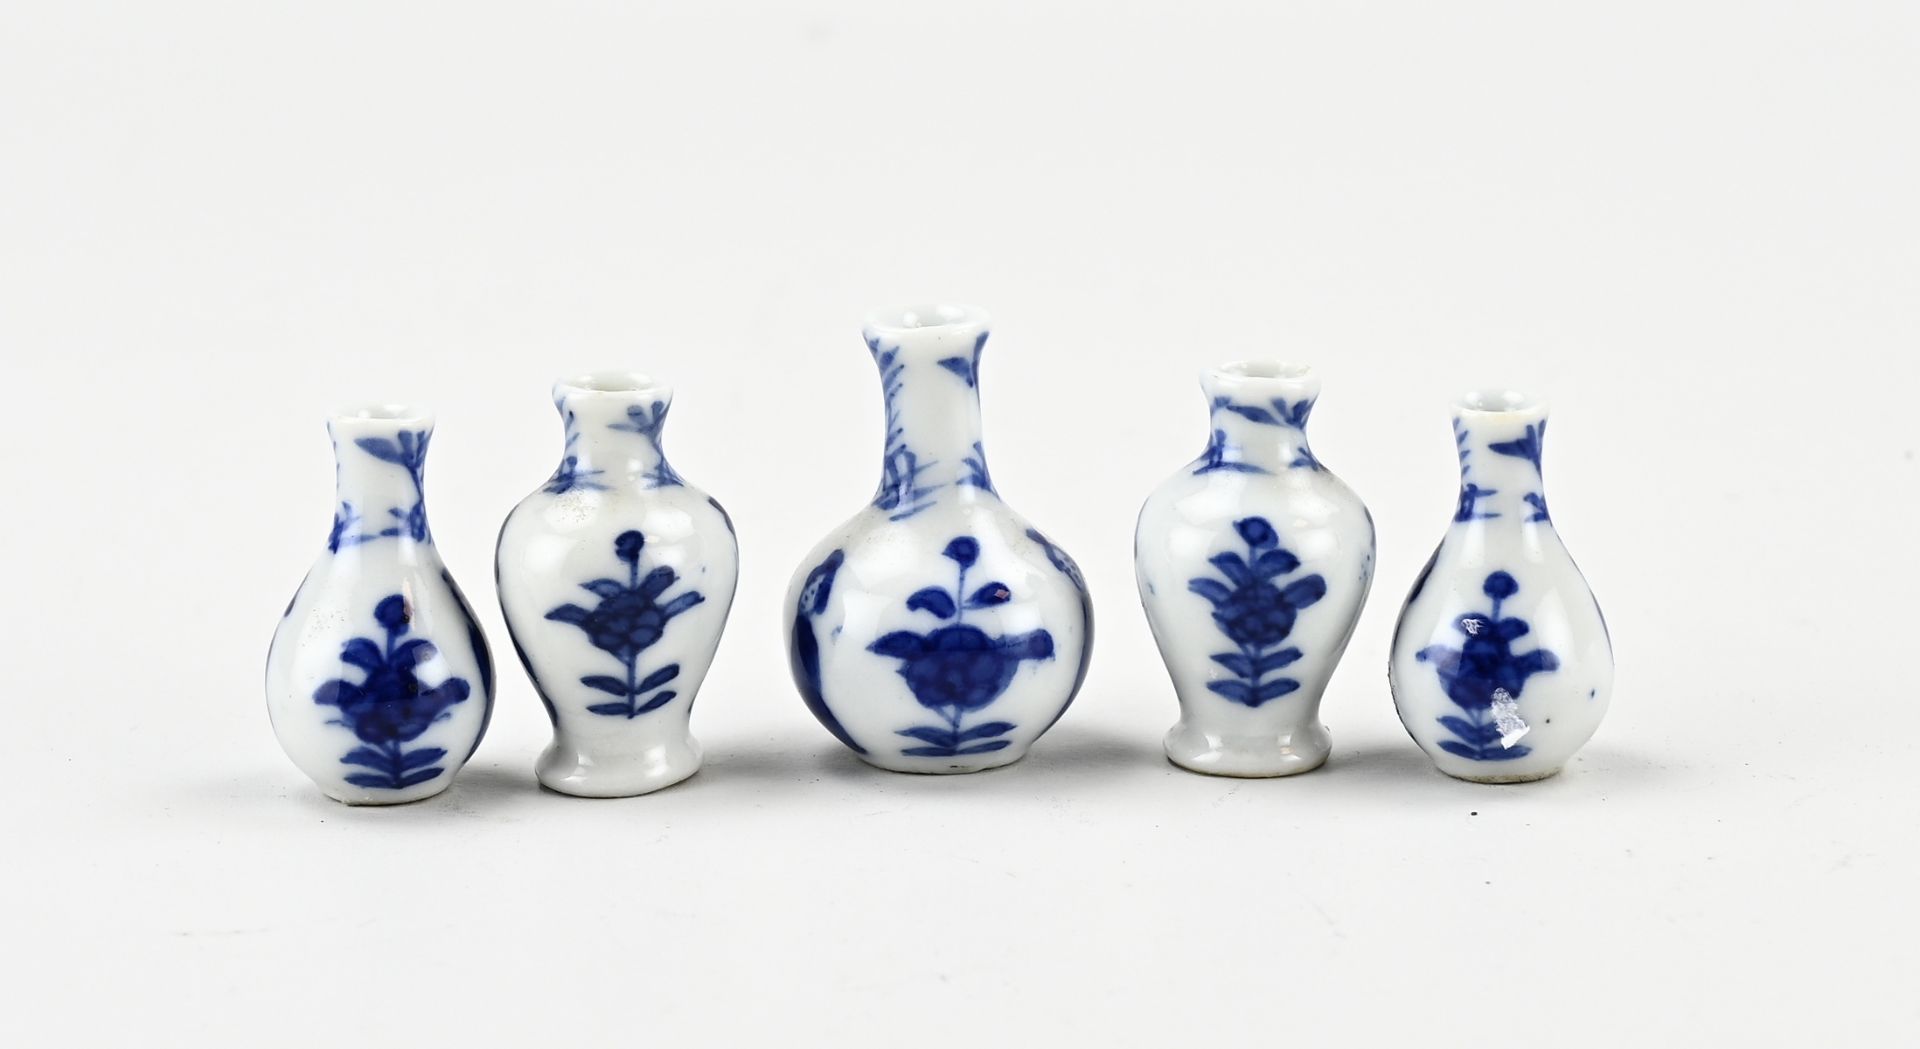 5 Chinese bibilot vases, H 3.5 - 4 cm. - Image 2 of 2